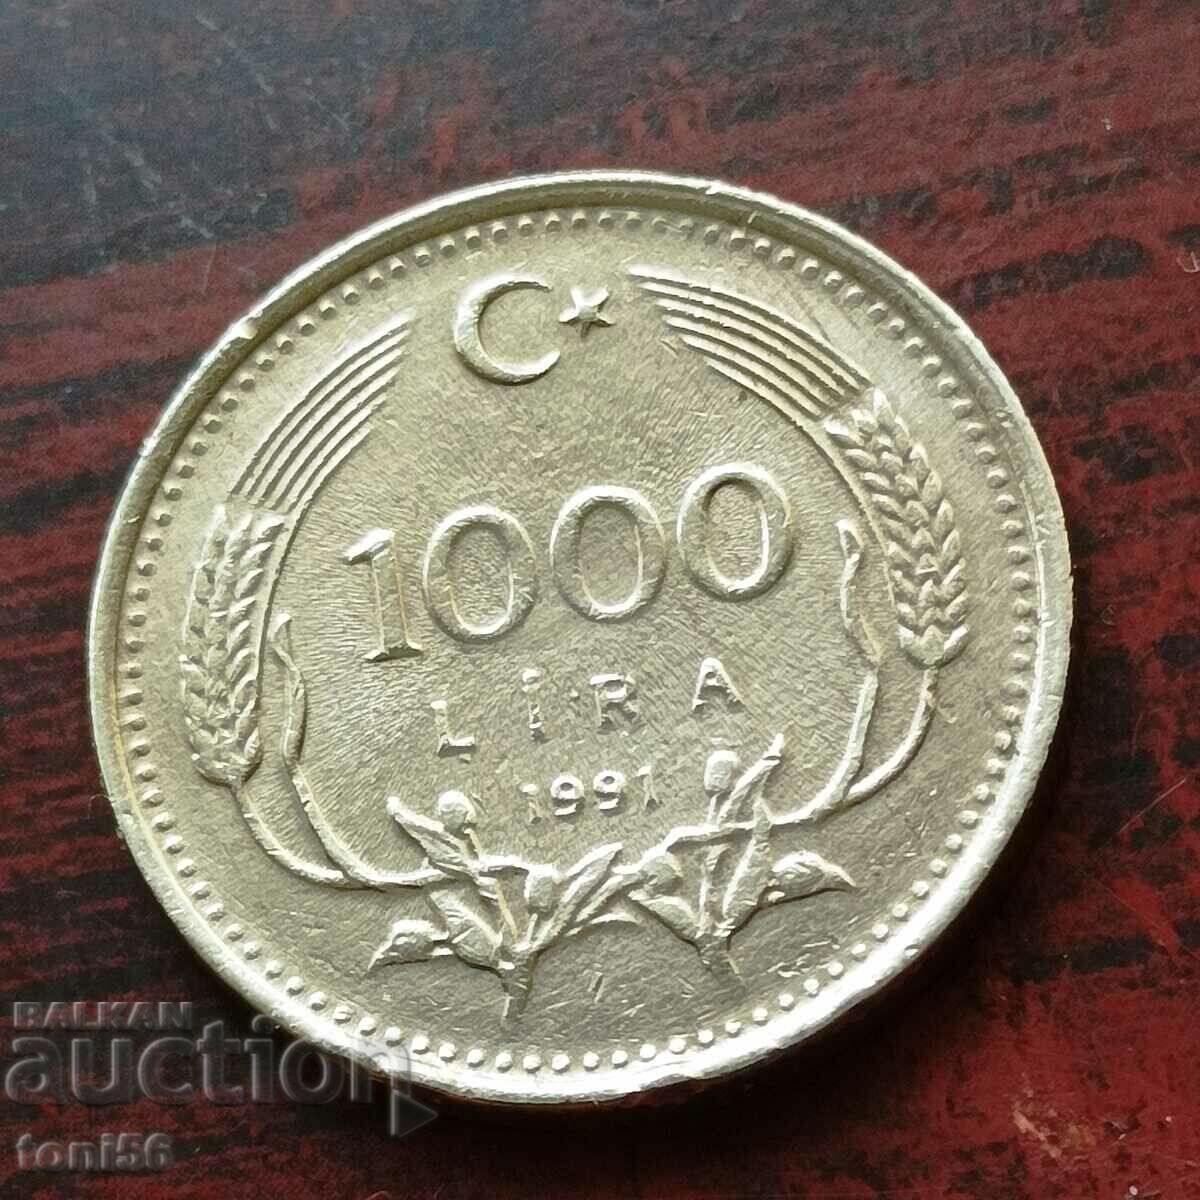 Turcia 1000 lire 1991